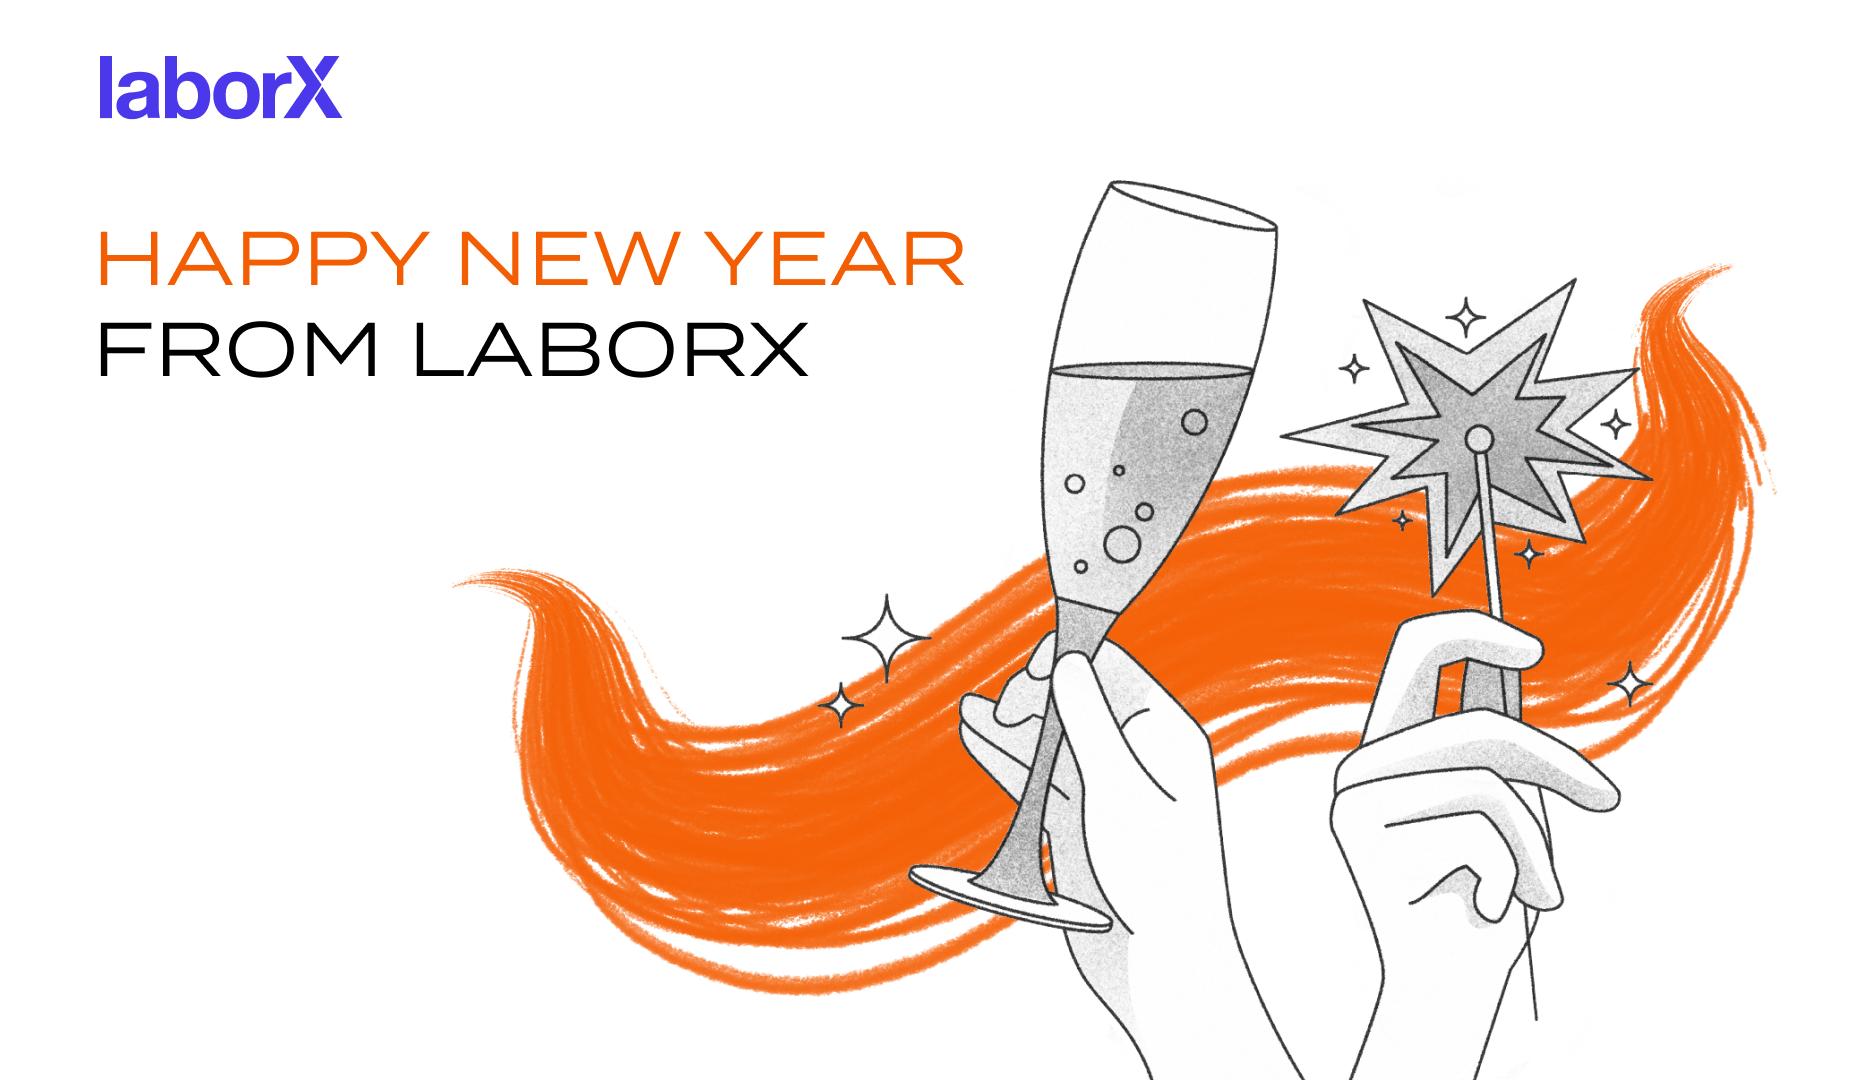 LaborX: The Year Ahead